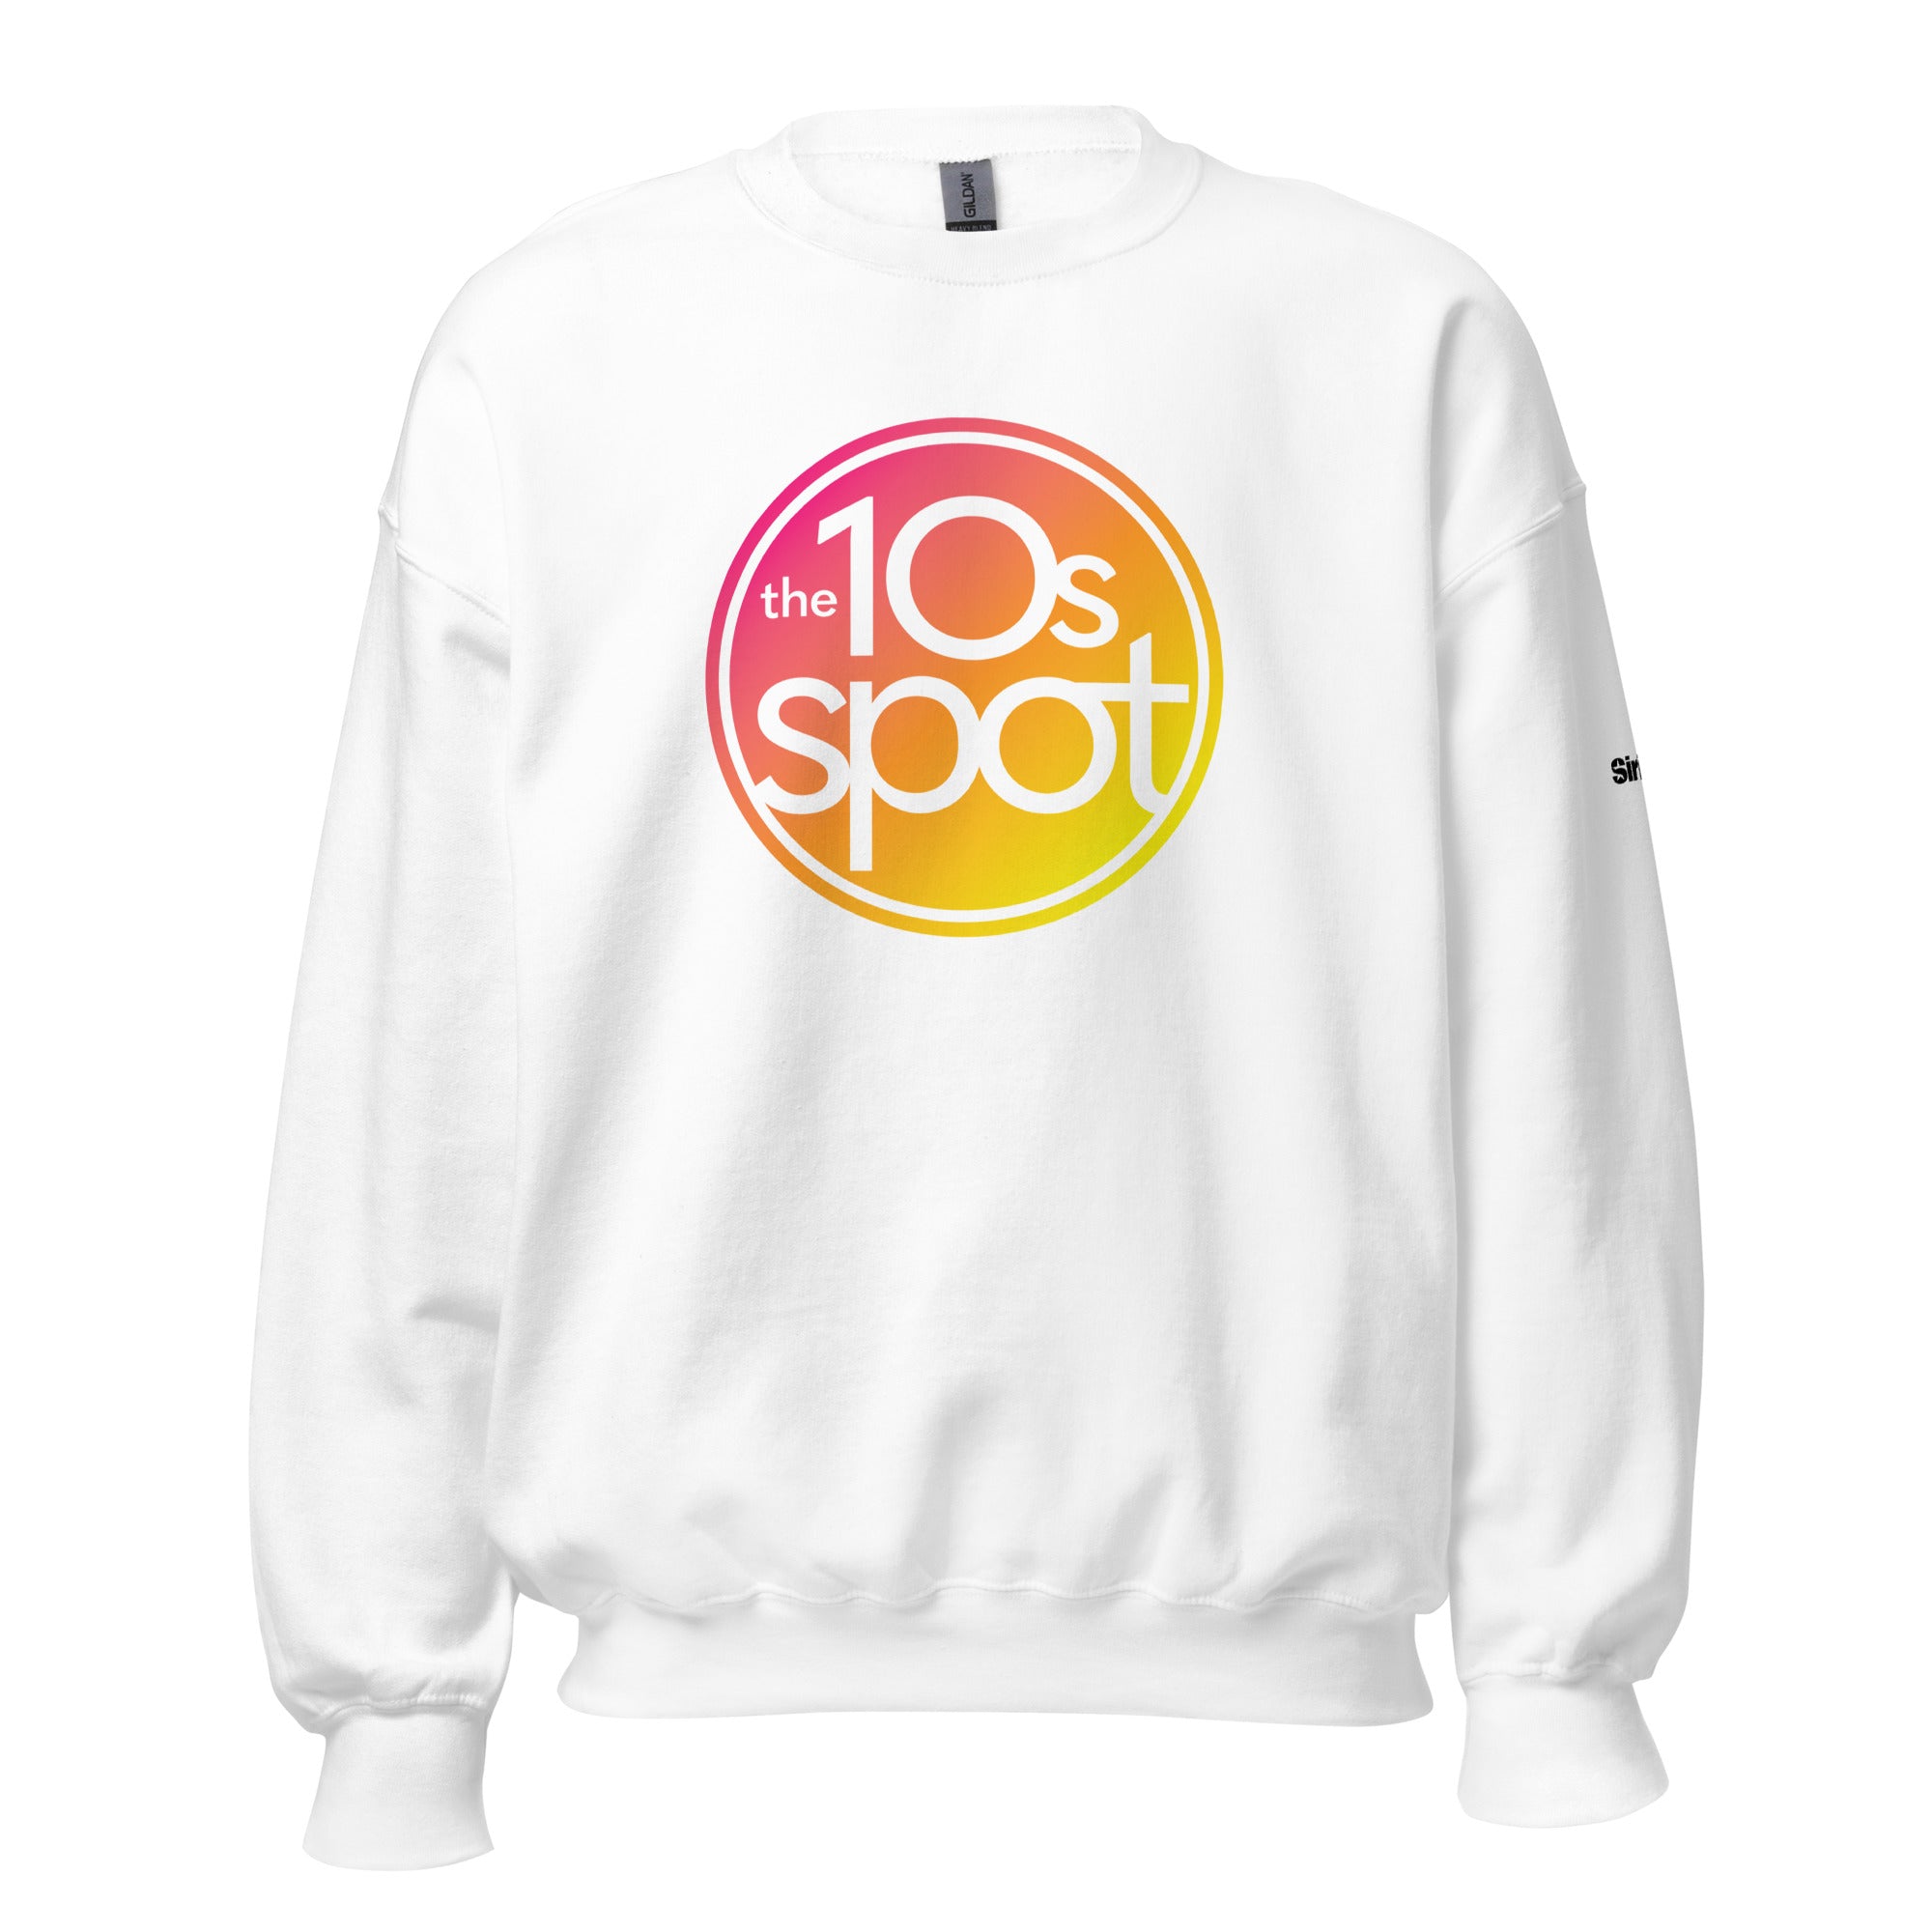 The 10s Spot: Sweatshirt (White)